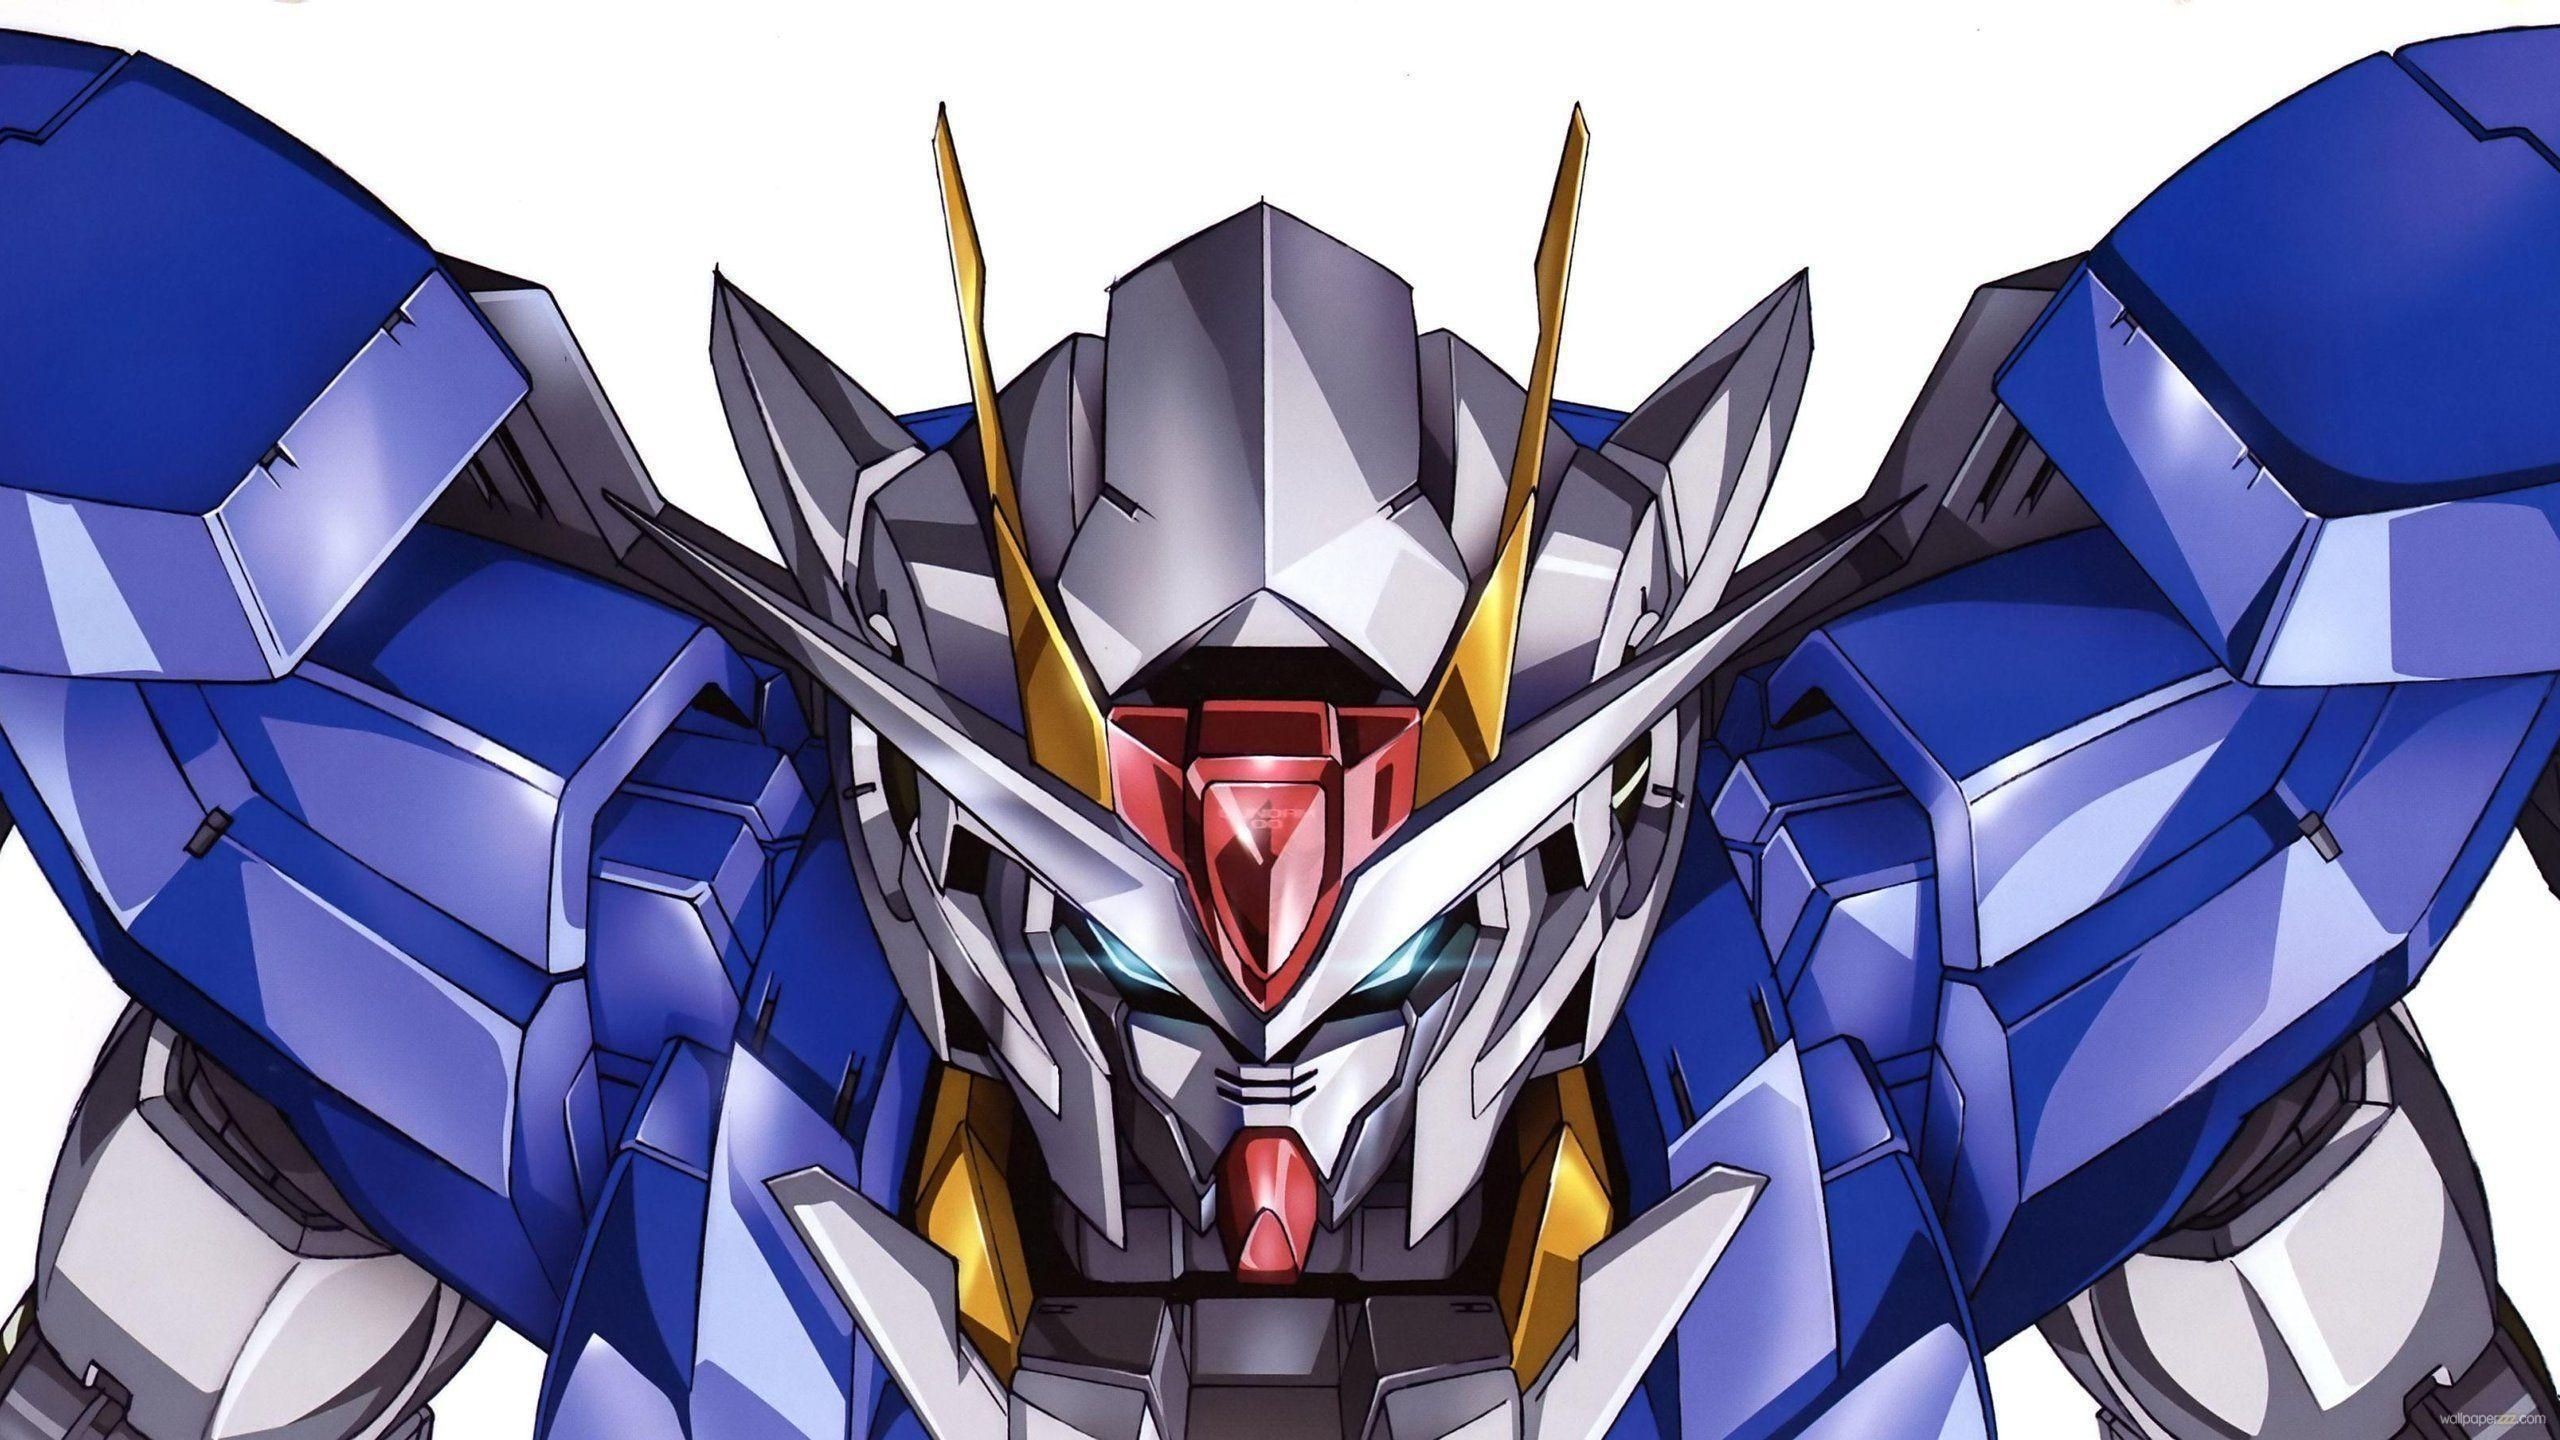 2560x1440 Gundam exia wallpapers on wallpaperplay jpg  Gundam exia wallpaper  1920x1080